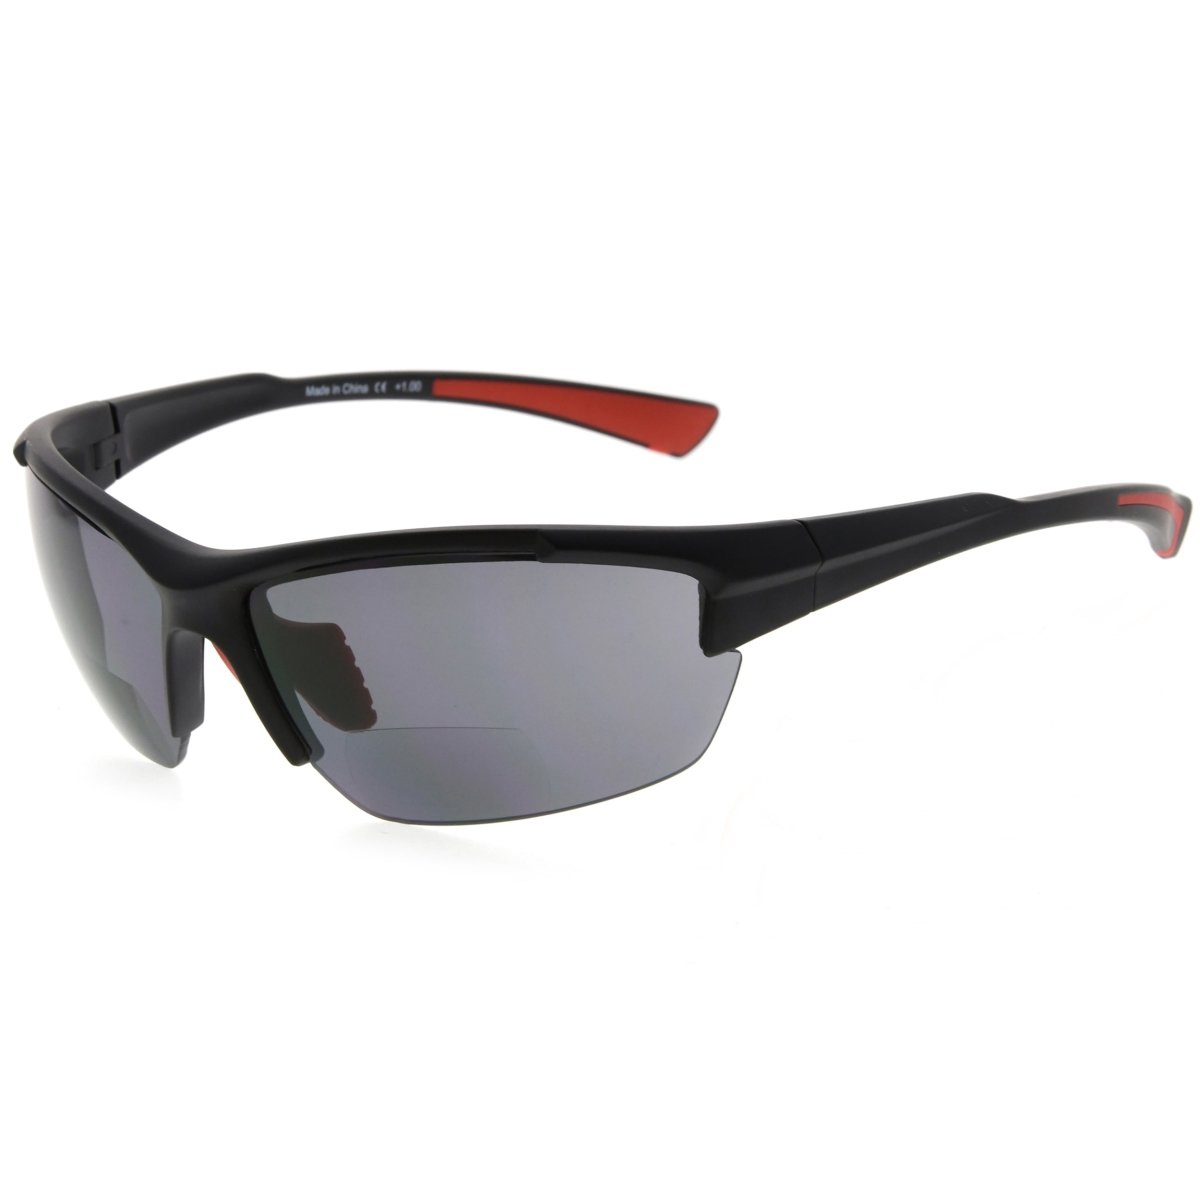 TR90 Half Rim Rectangle Bifocal Reading Sunglasses SG901